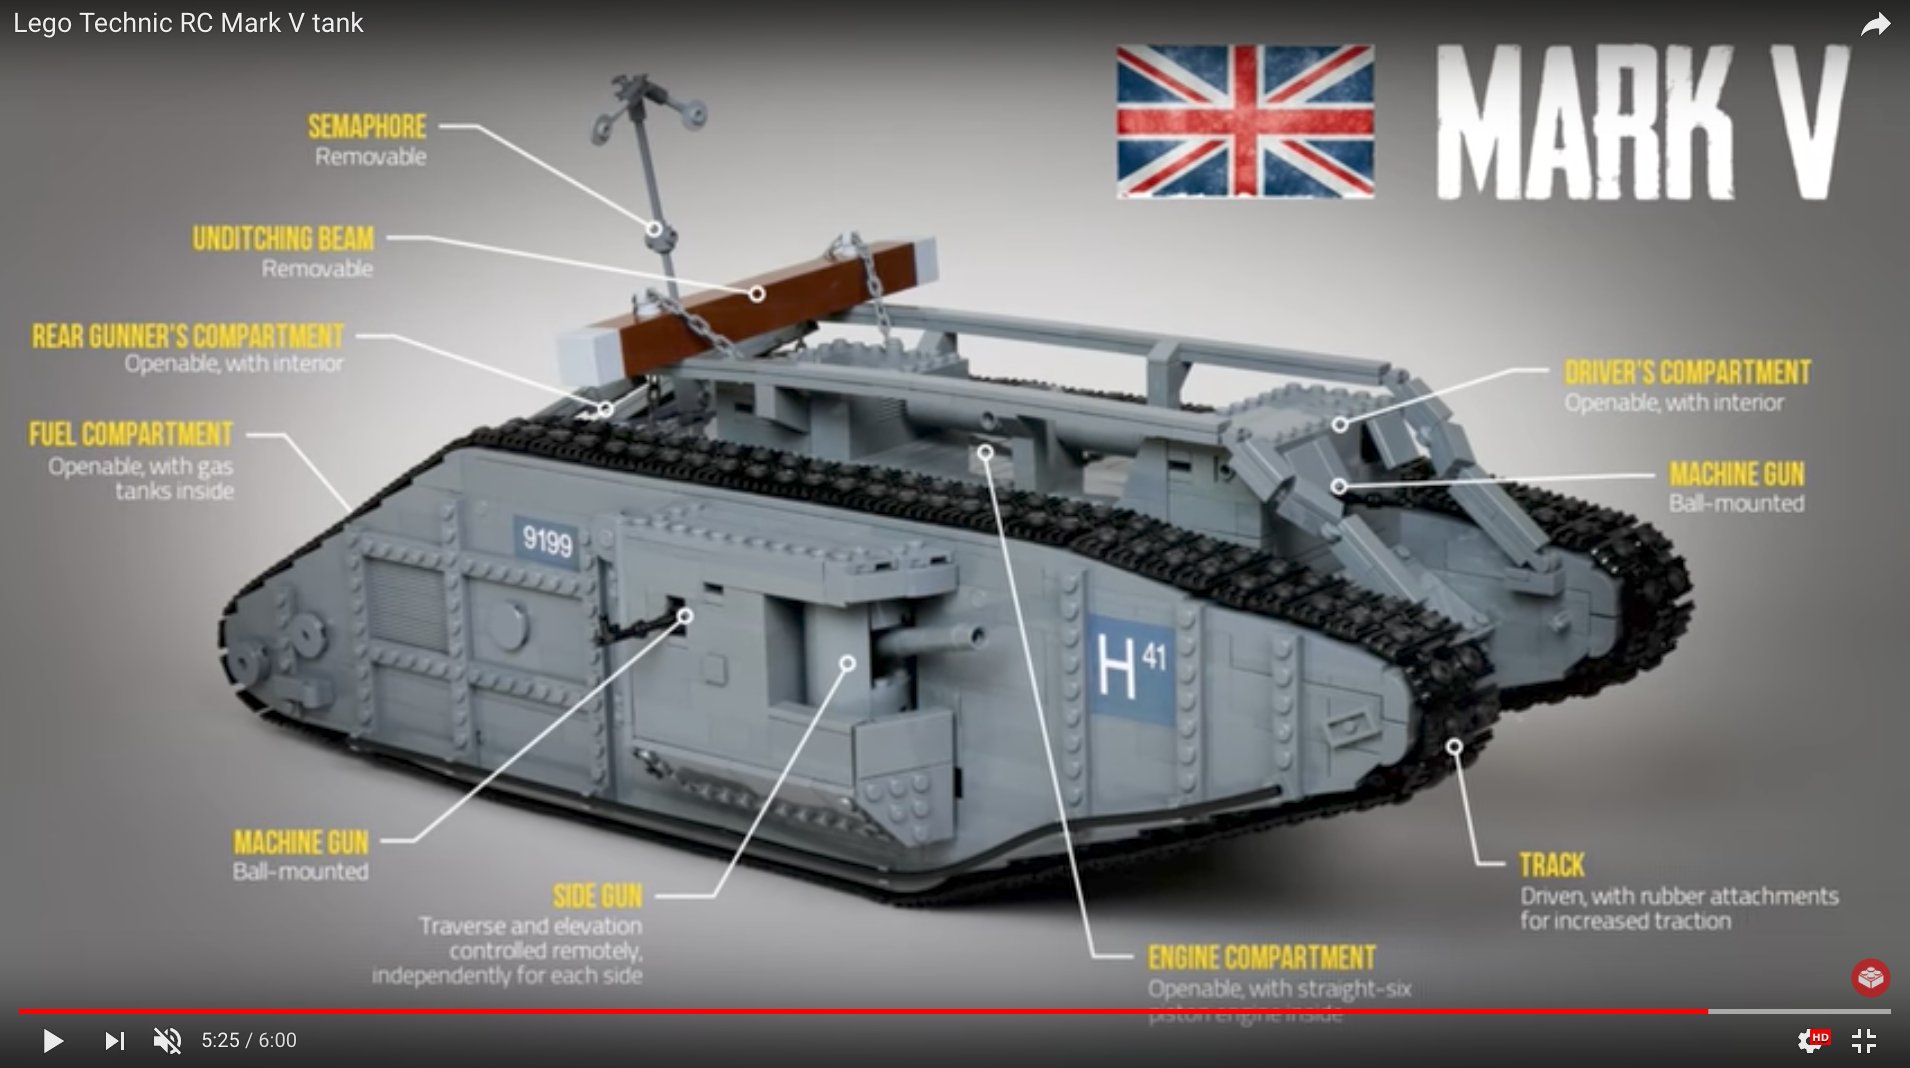 botanist Uoverensstemmelse Uafhængighed Real Time History on Twitter: "Lego Technic RC Mark V tank:  https://t.co/3jHRcApH52 https://t.co/UXOqLZ3peH" / Twitter